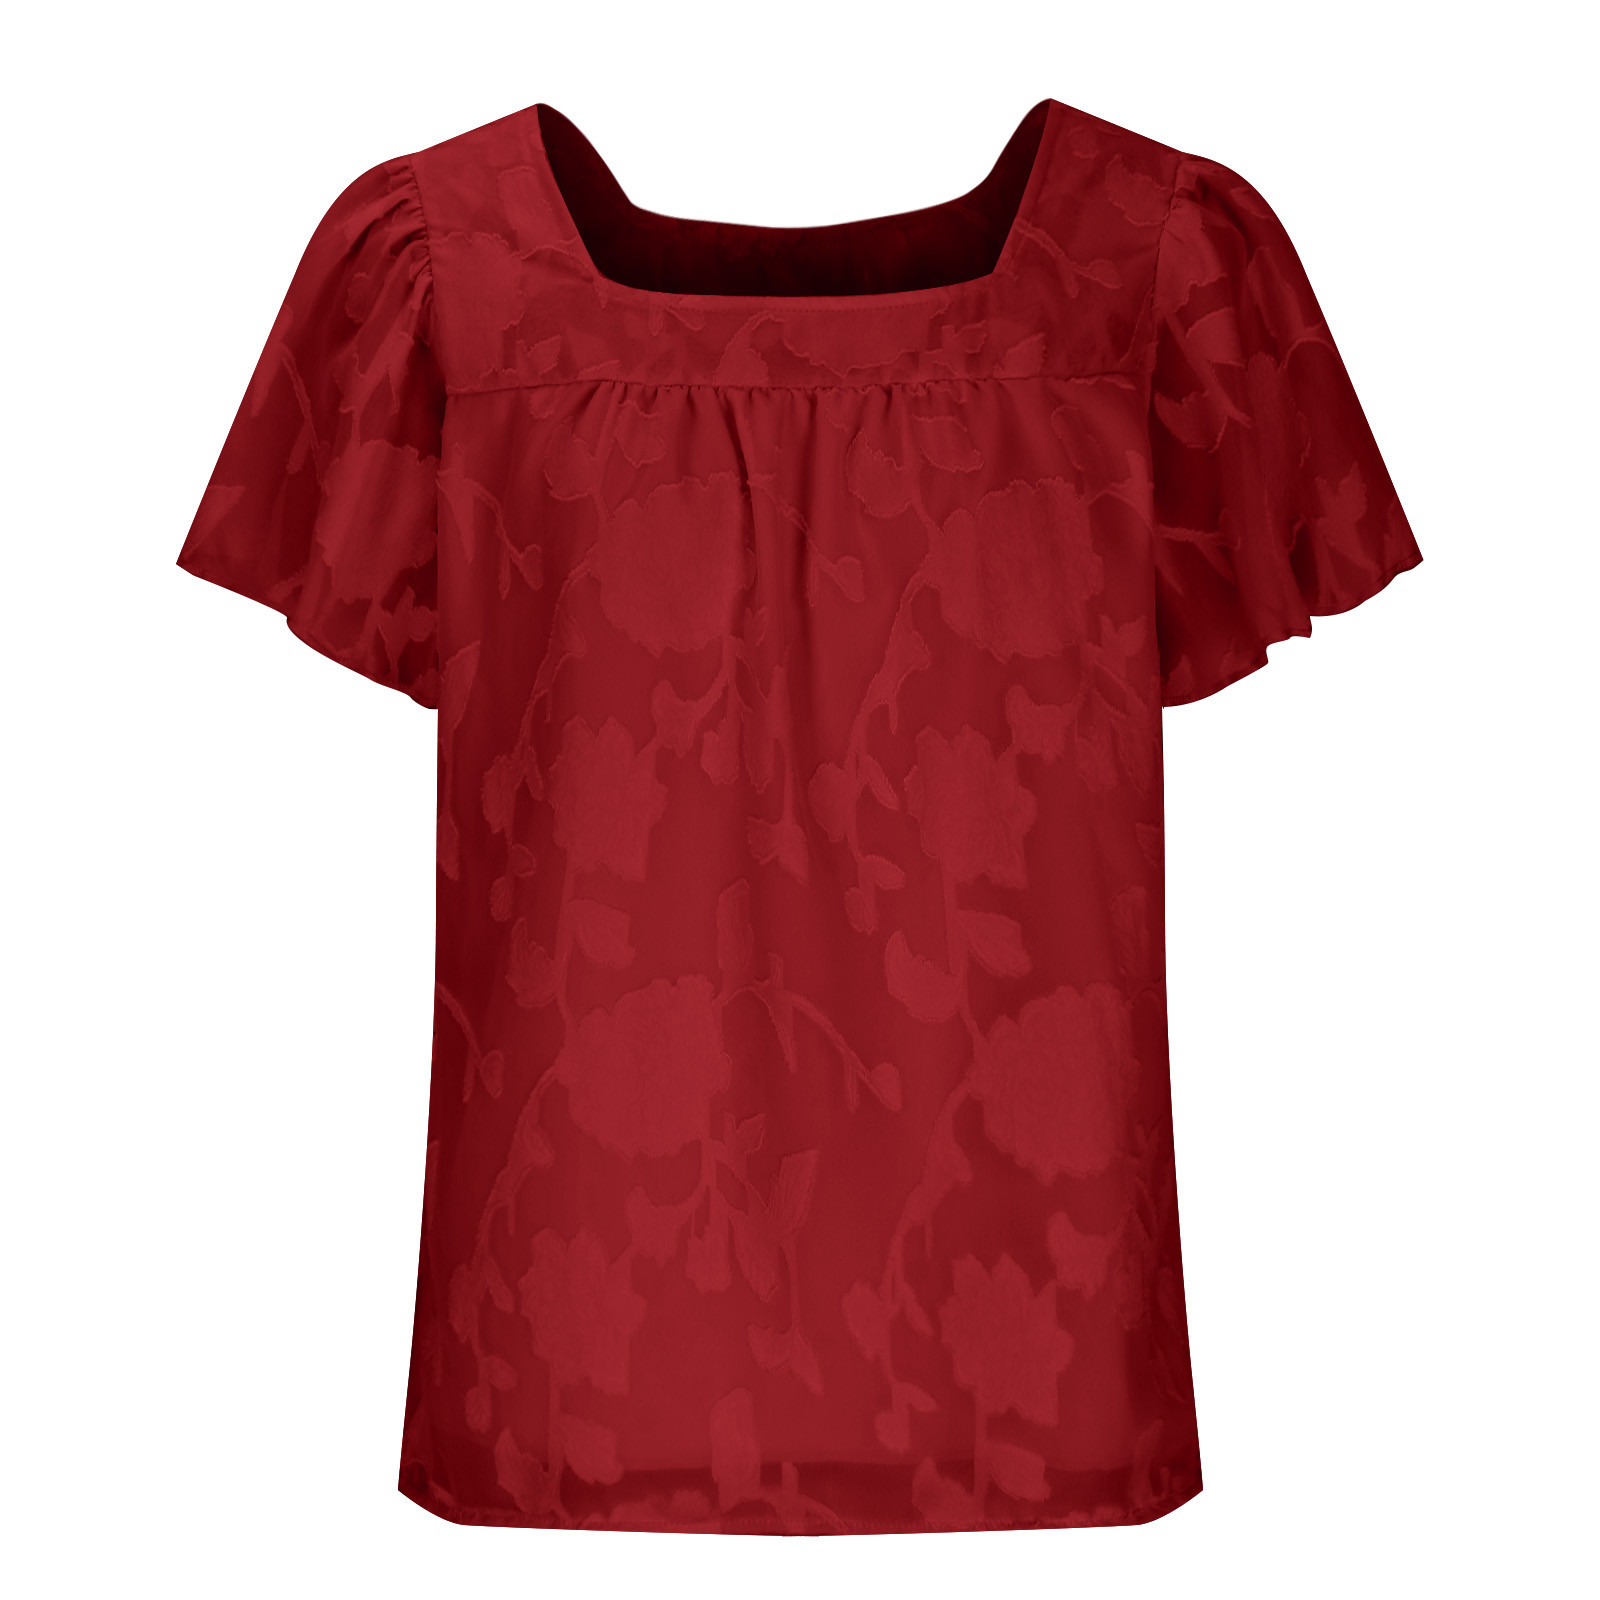 Scyoekwg Womens Tops Summer Trendy Short Sleeve T Shirts Dressy Casual ...